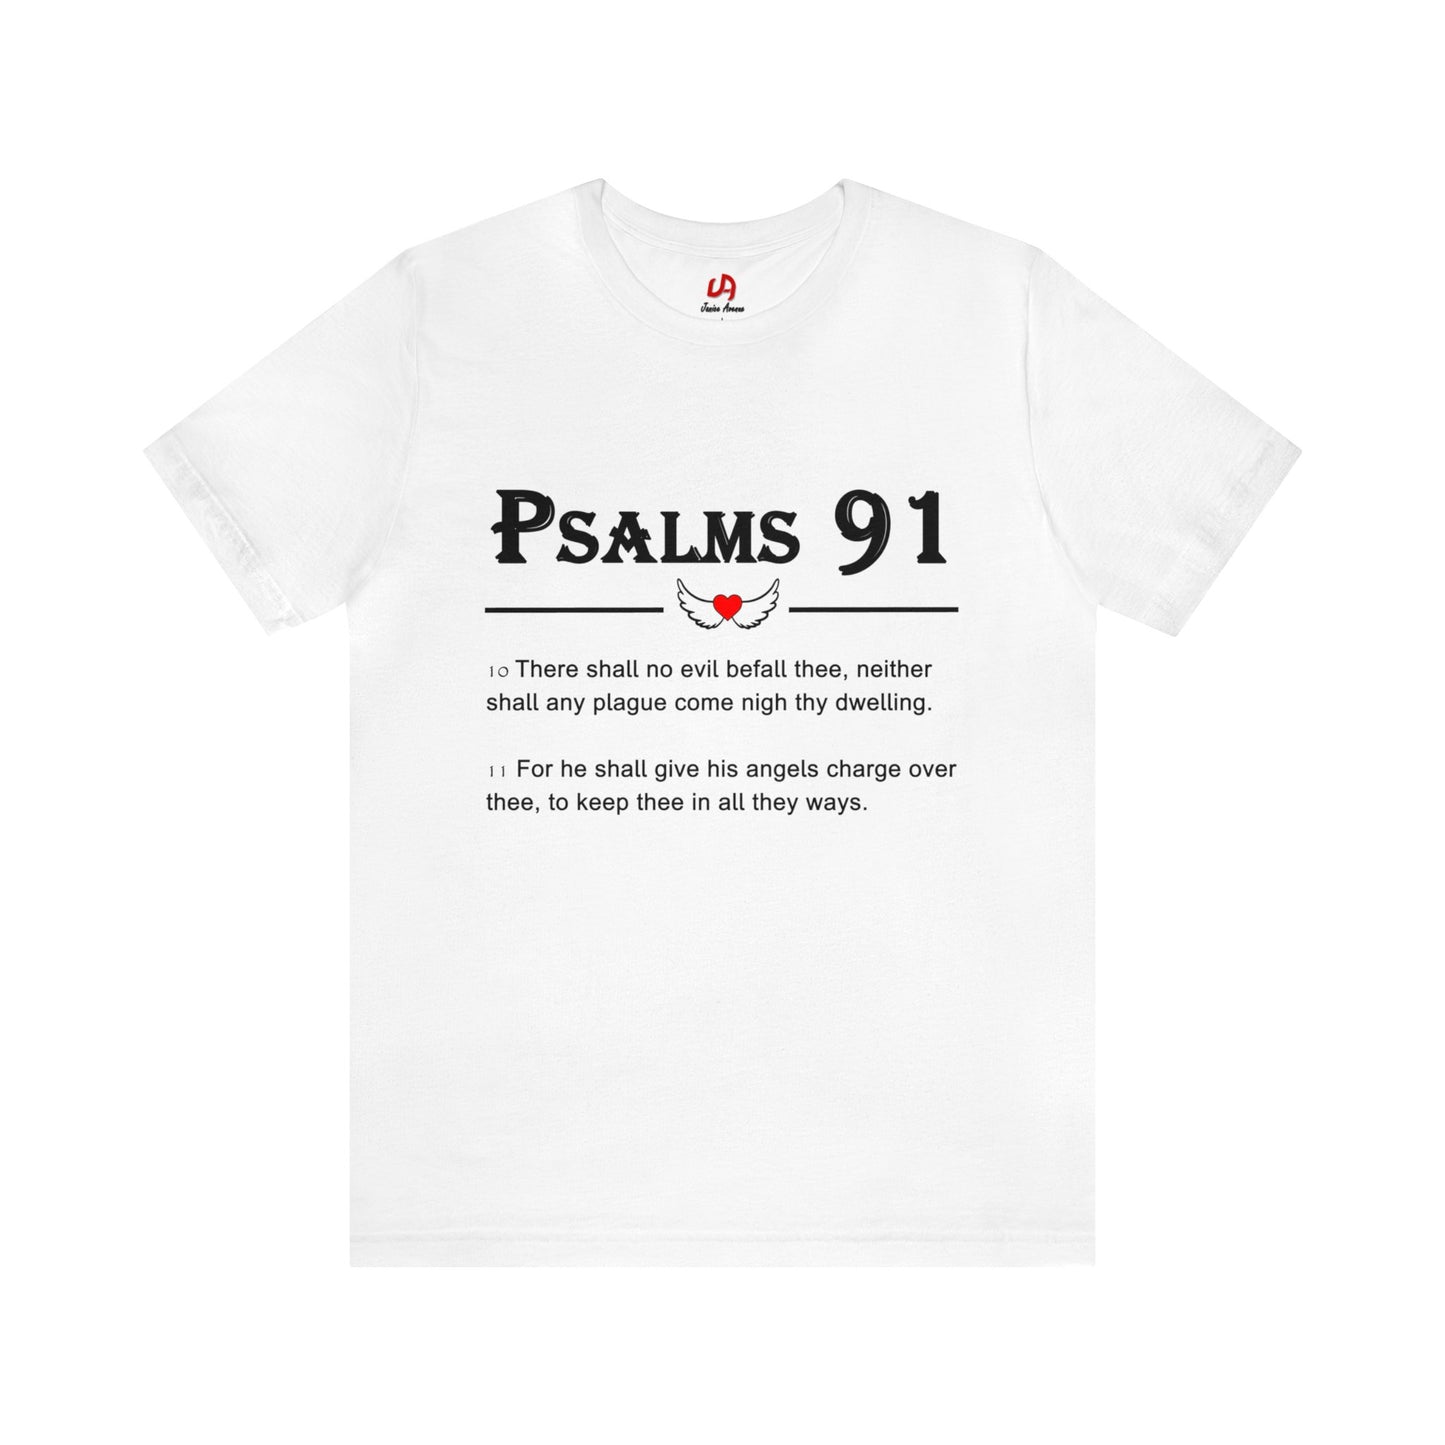 Psalms 91 Shirt - Black Text